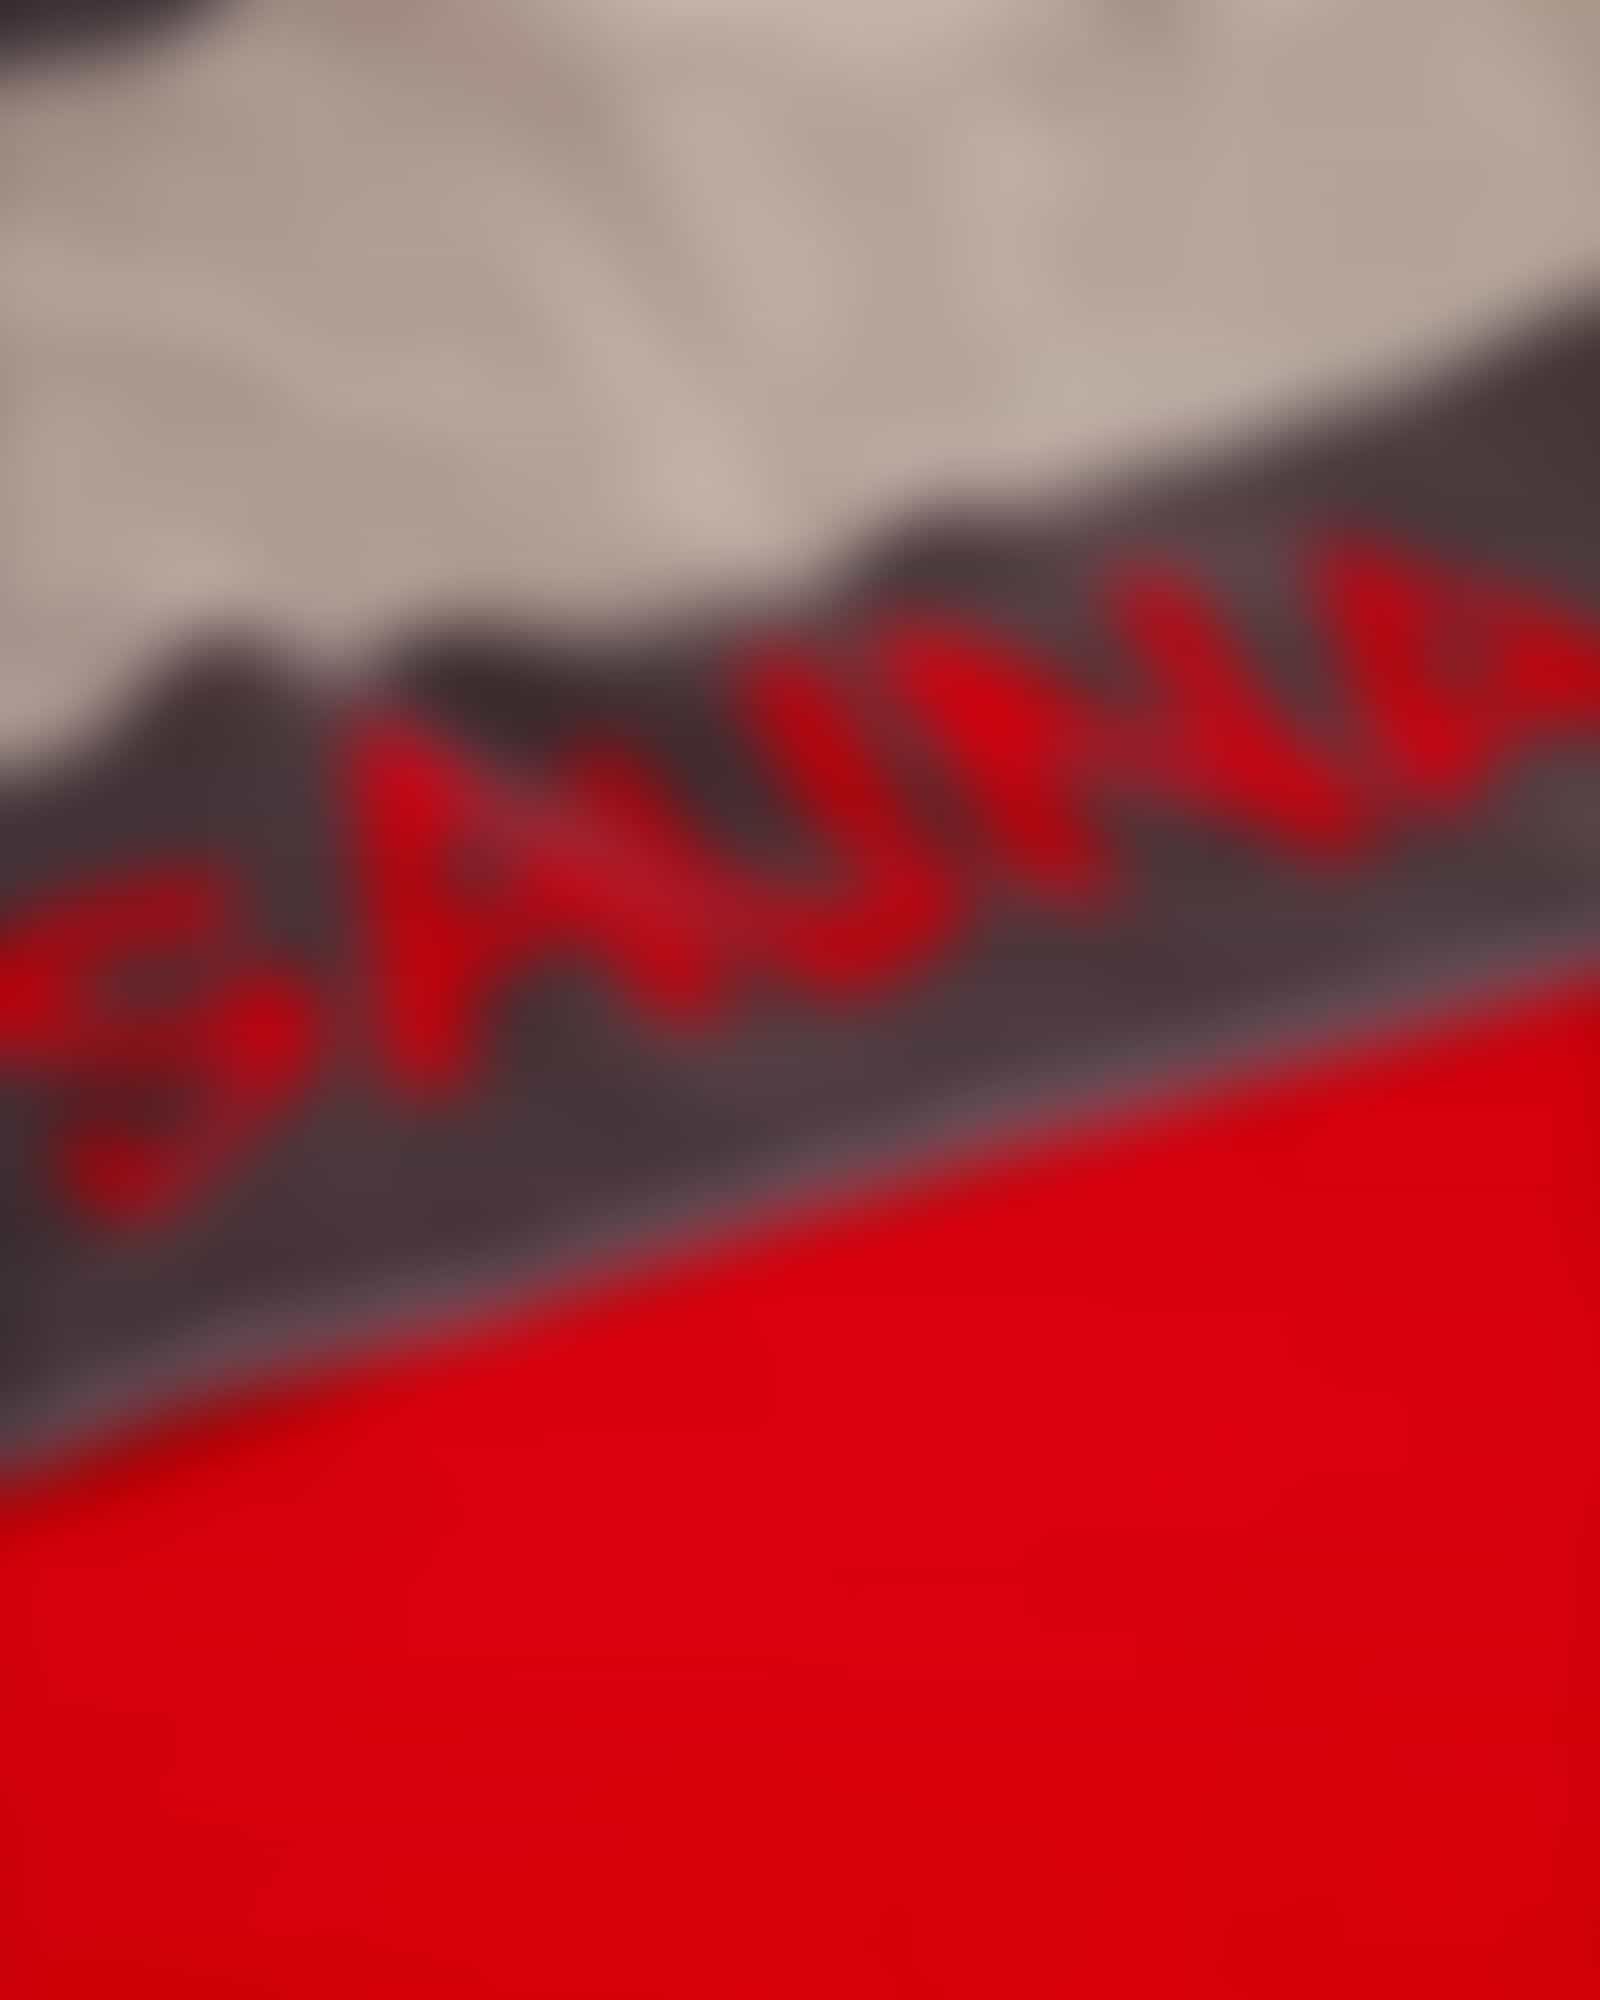 Cawö - Saunatuch 599 - 80x200 cm - Farbe: anthrazit/rot - 72